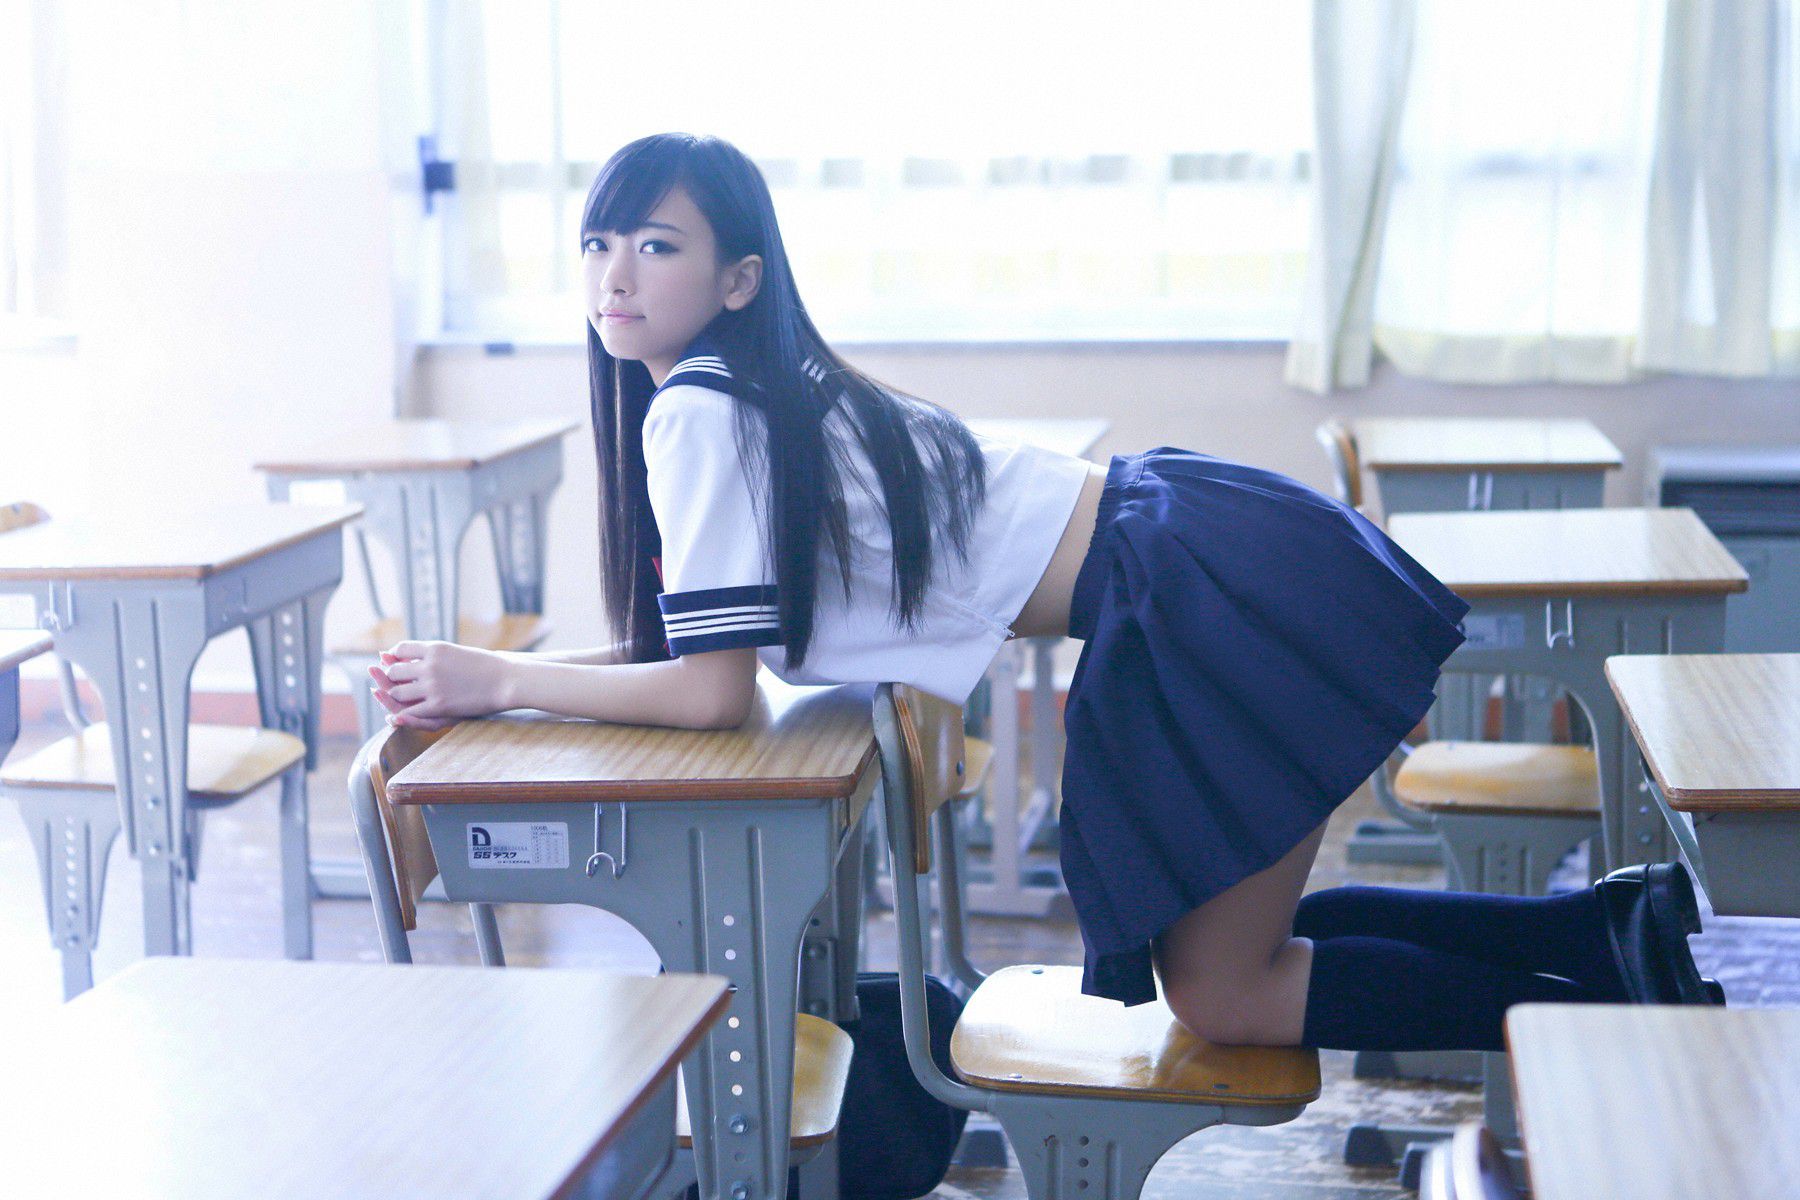 Japanese slutty girl wears uniform